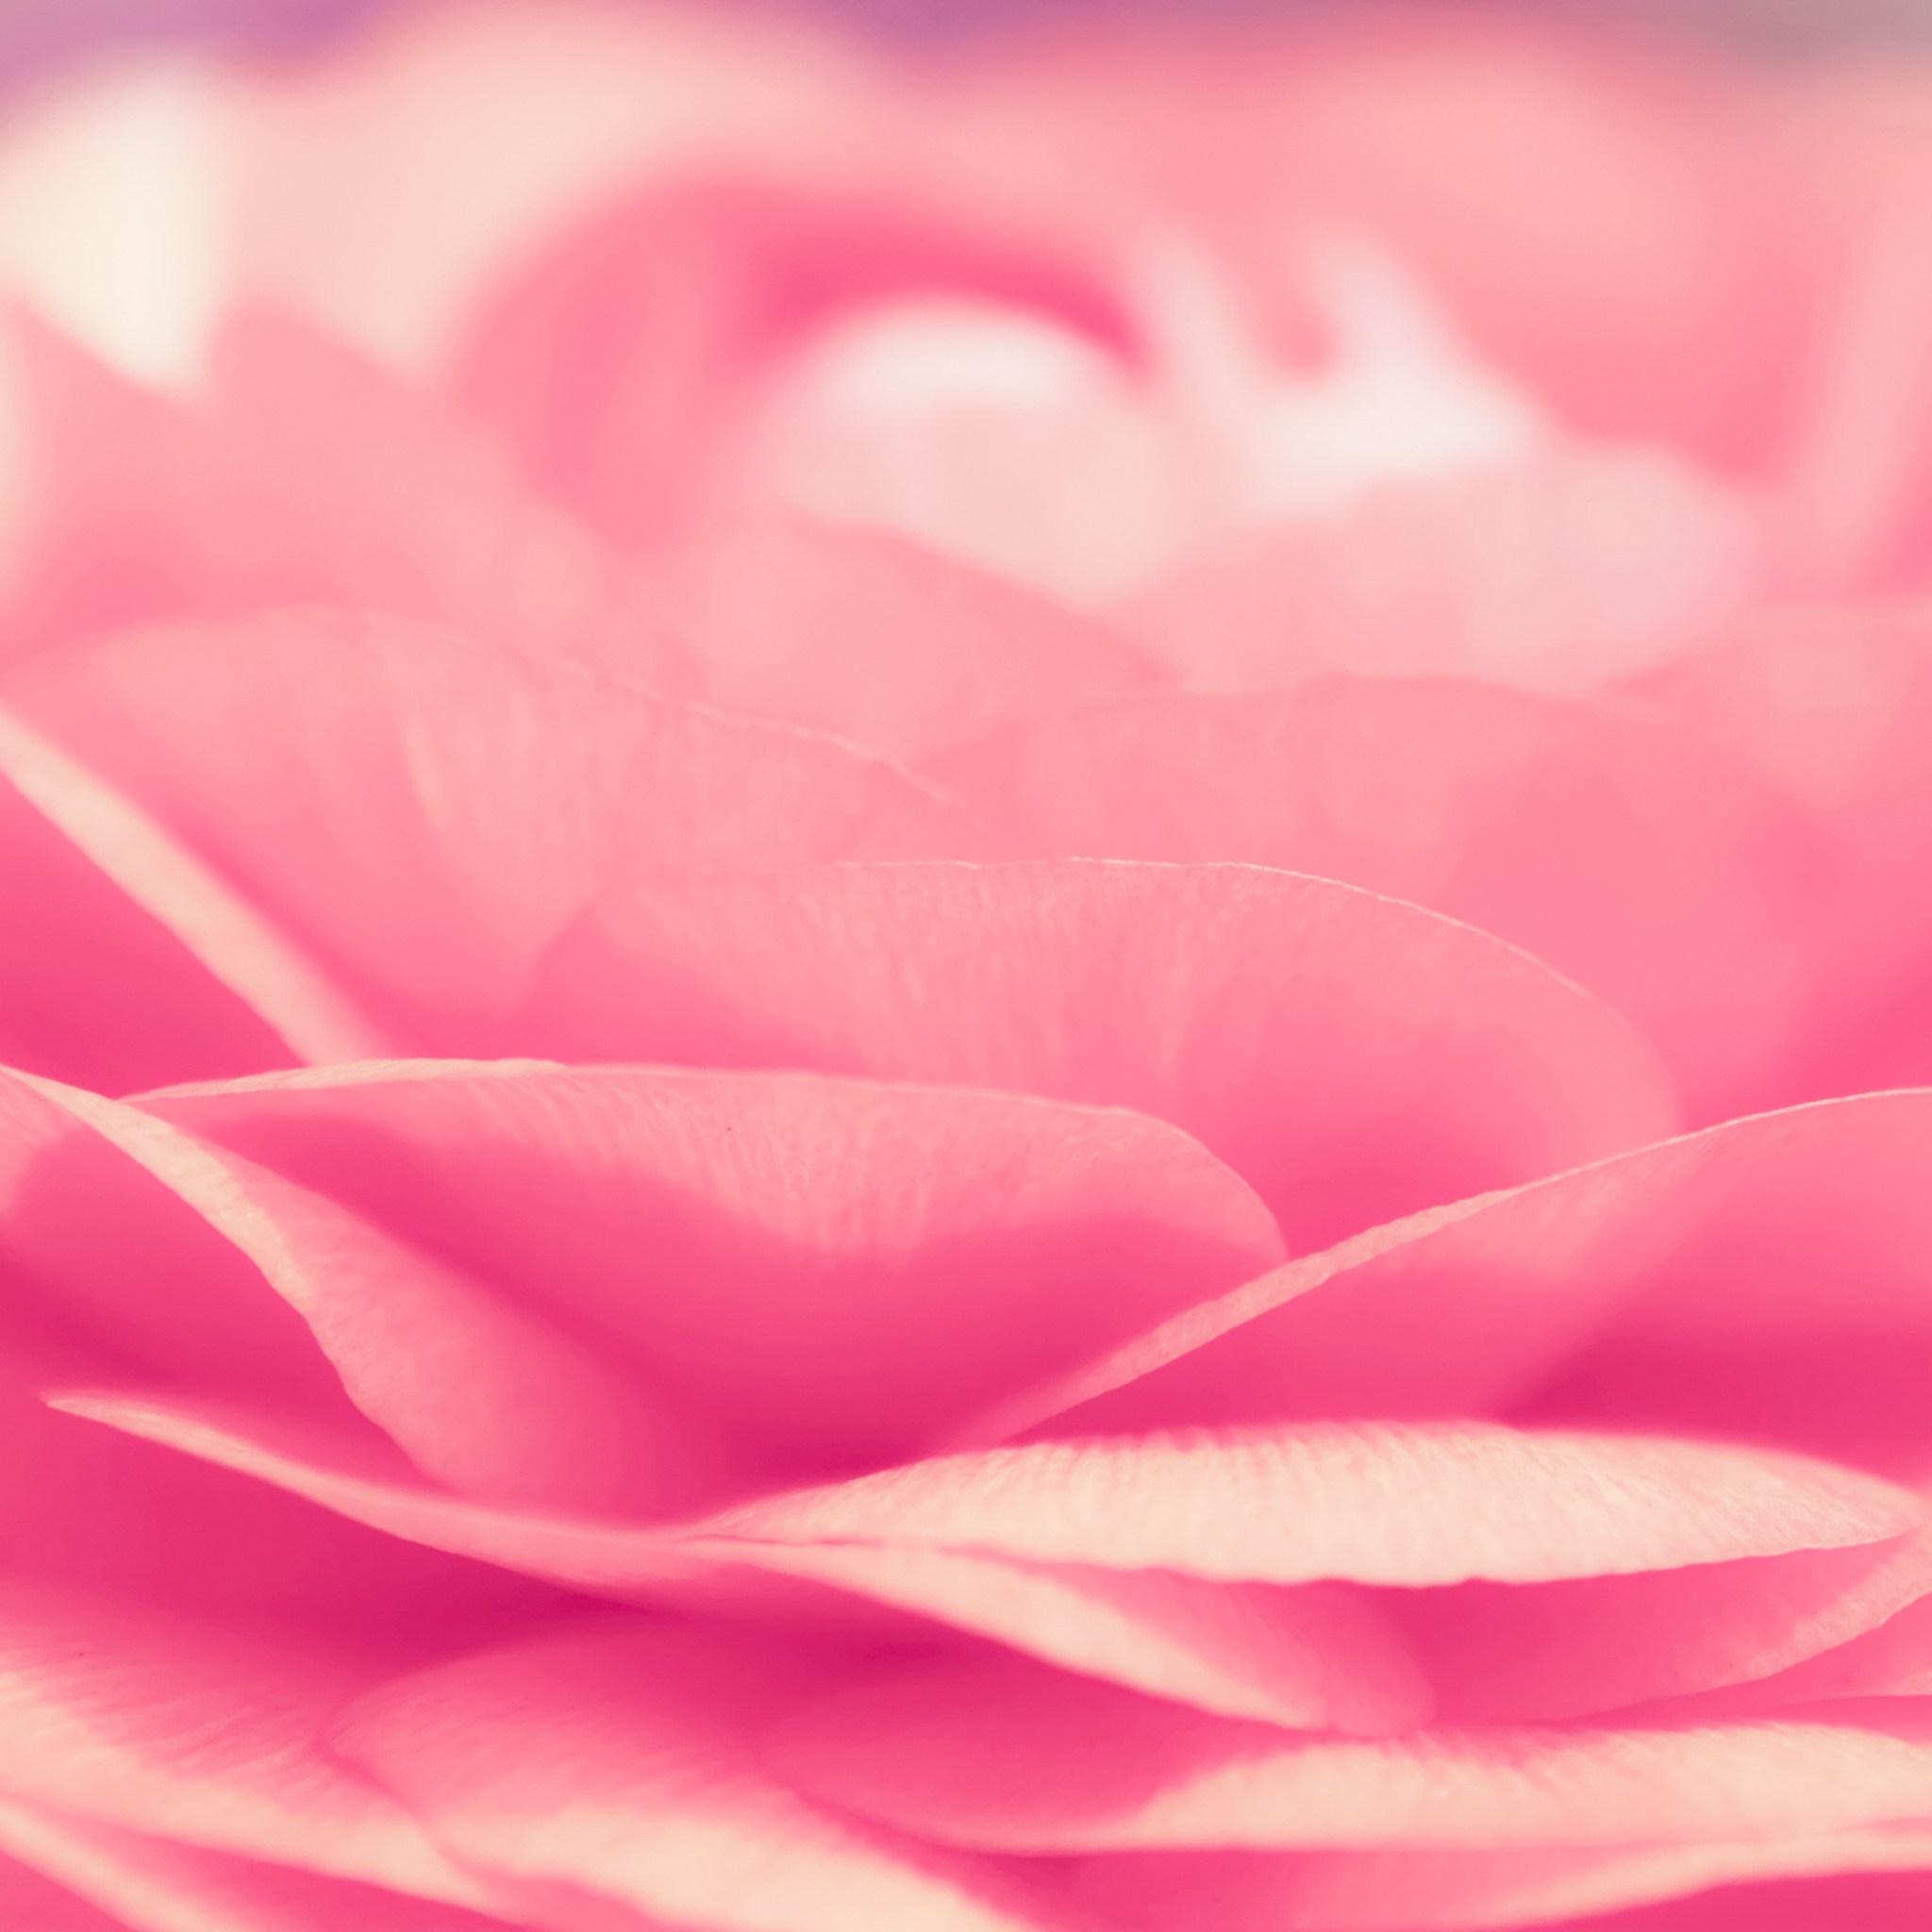 Pink Rose Petals. Beautiful Retina iPad Wallpaper